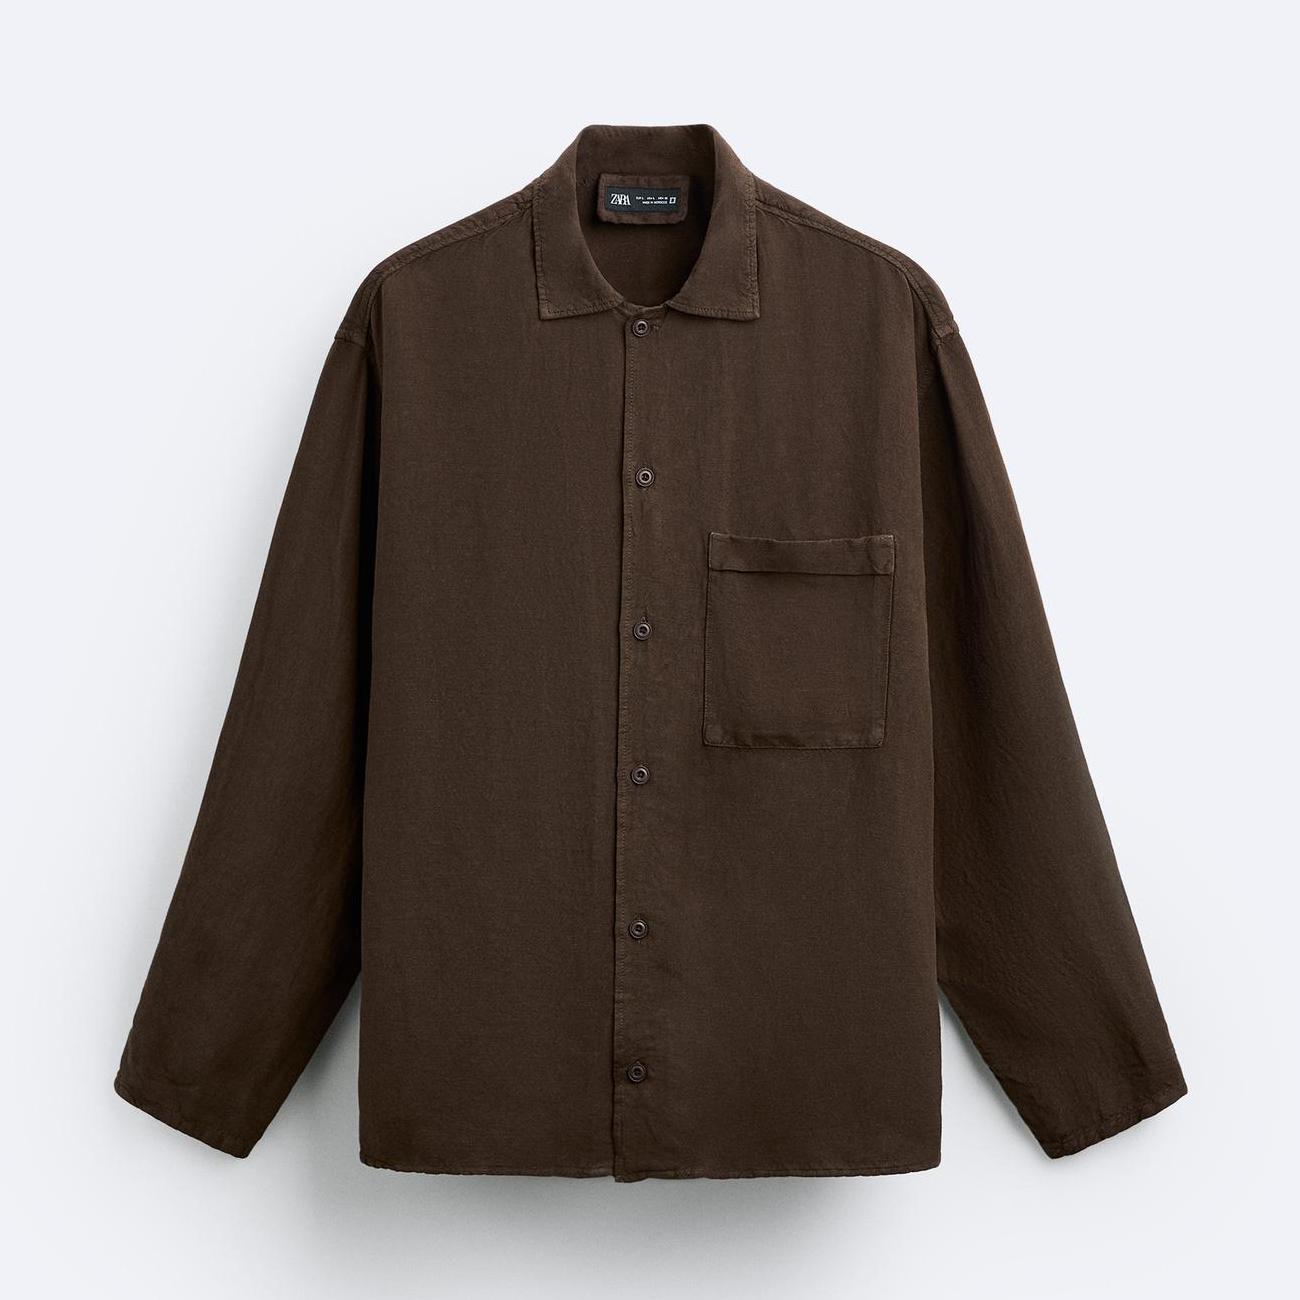 Рубашка Zara Viscose/linen Blend, коричневый рубашка zara linen blend with vents серый